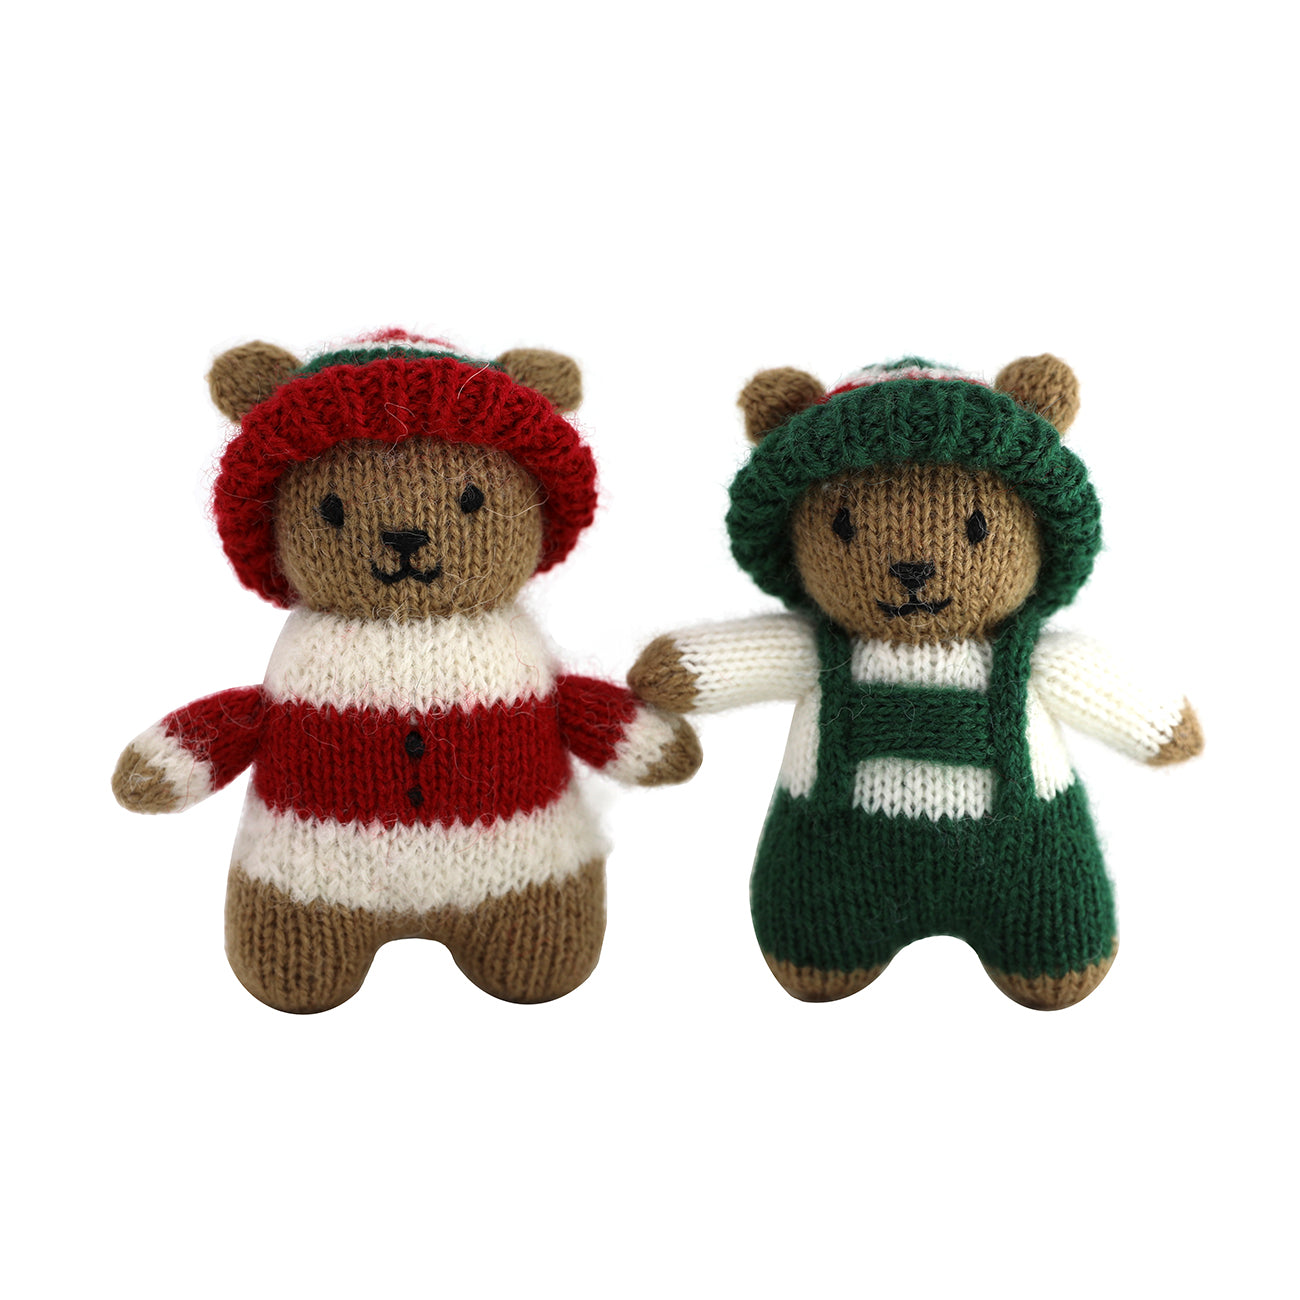 Swiss Christmas Bears Ornaments, set of 2